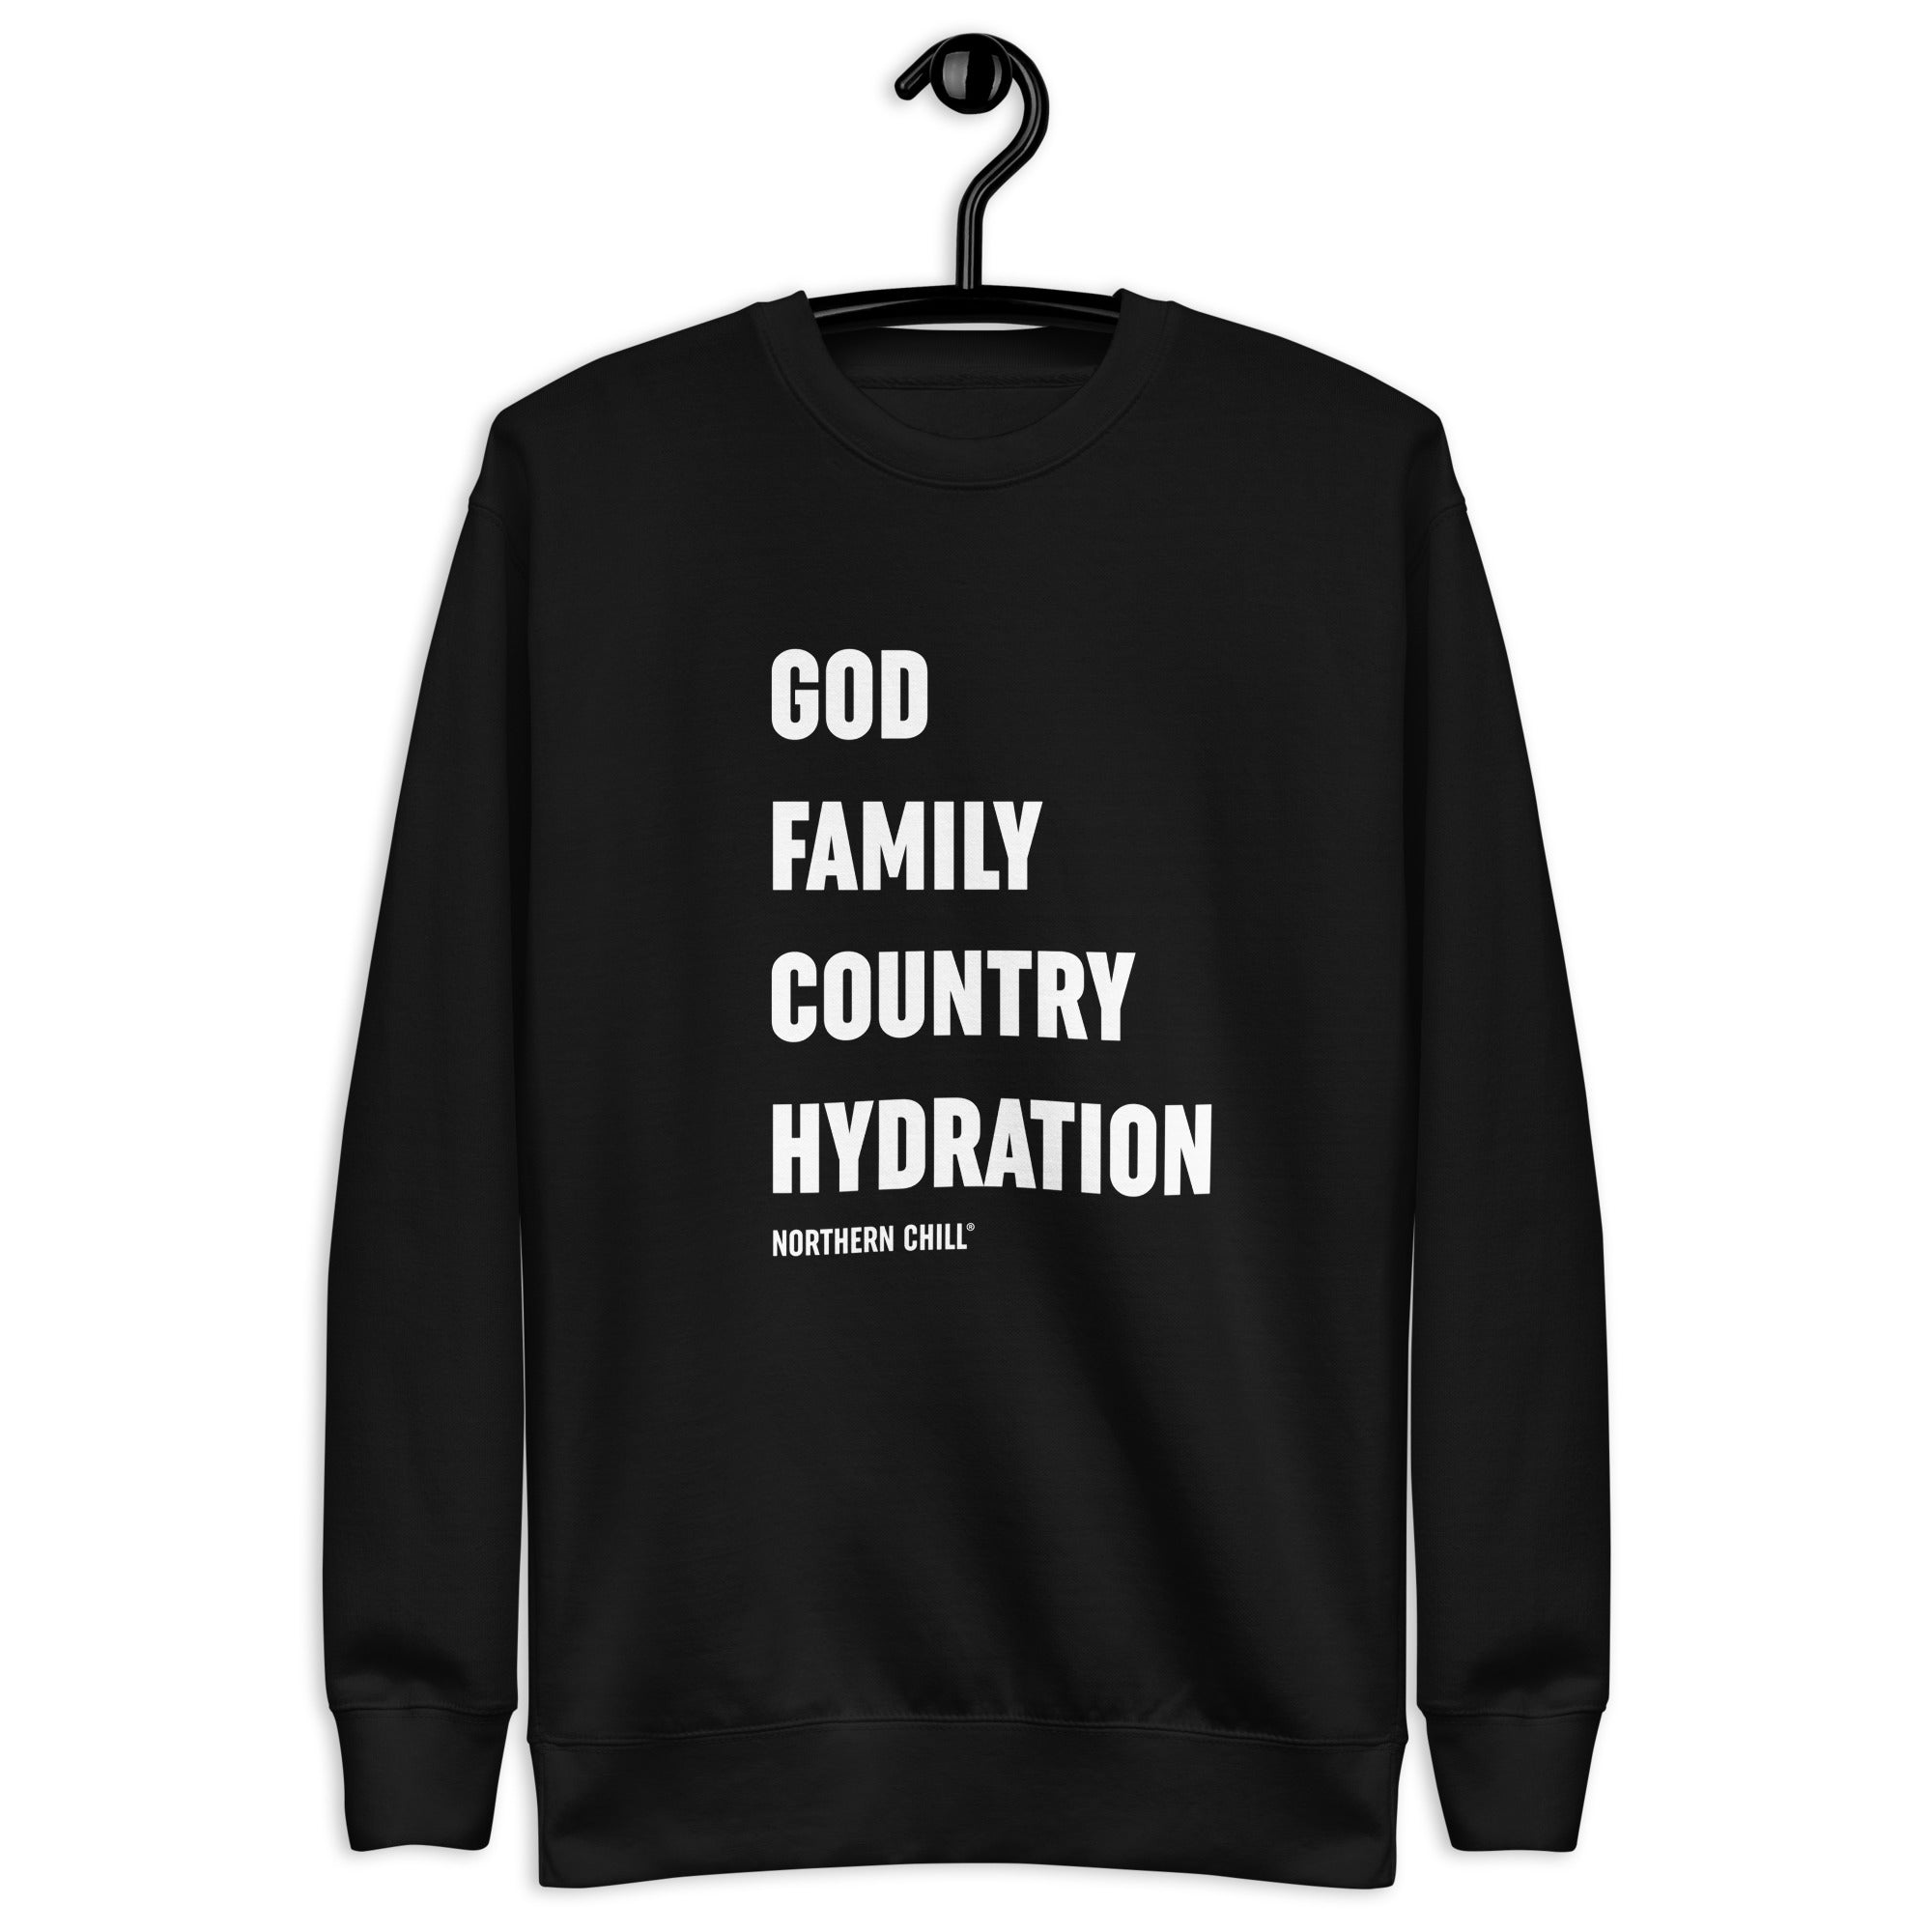 Hydration Unisex Premium Sweatshirt